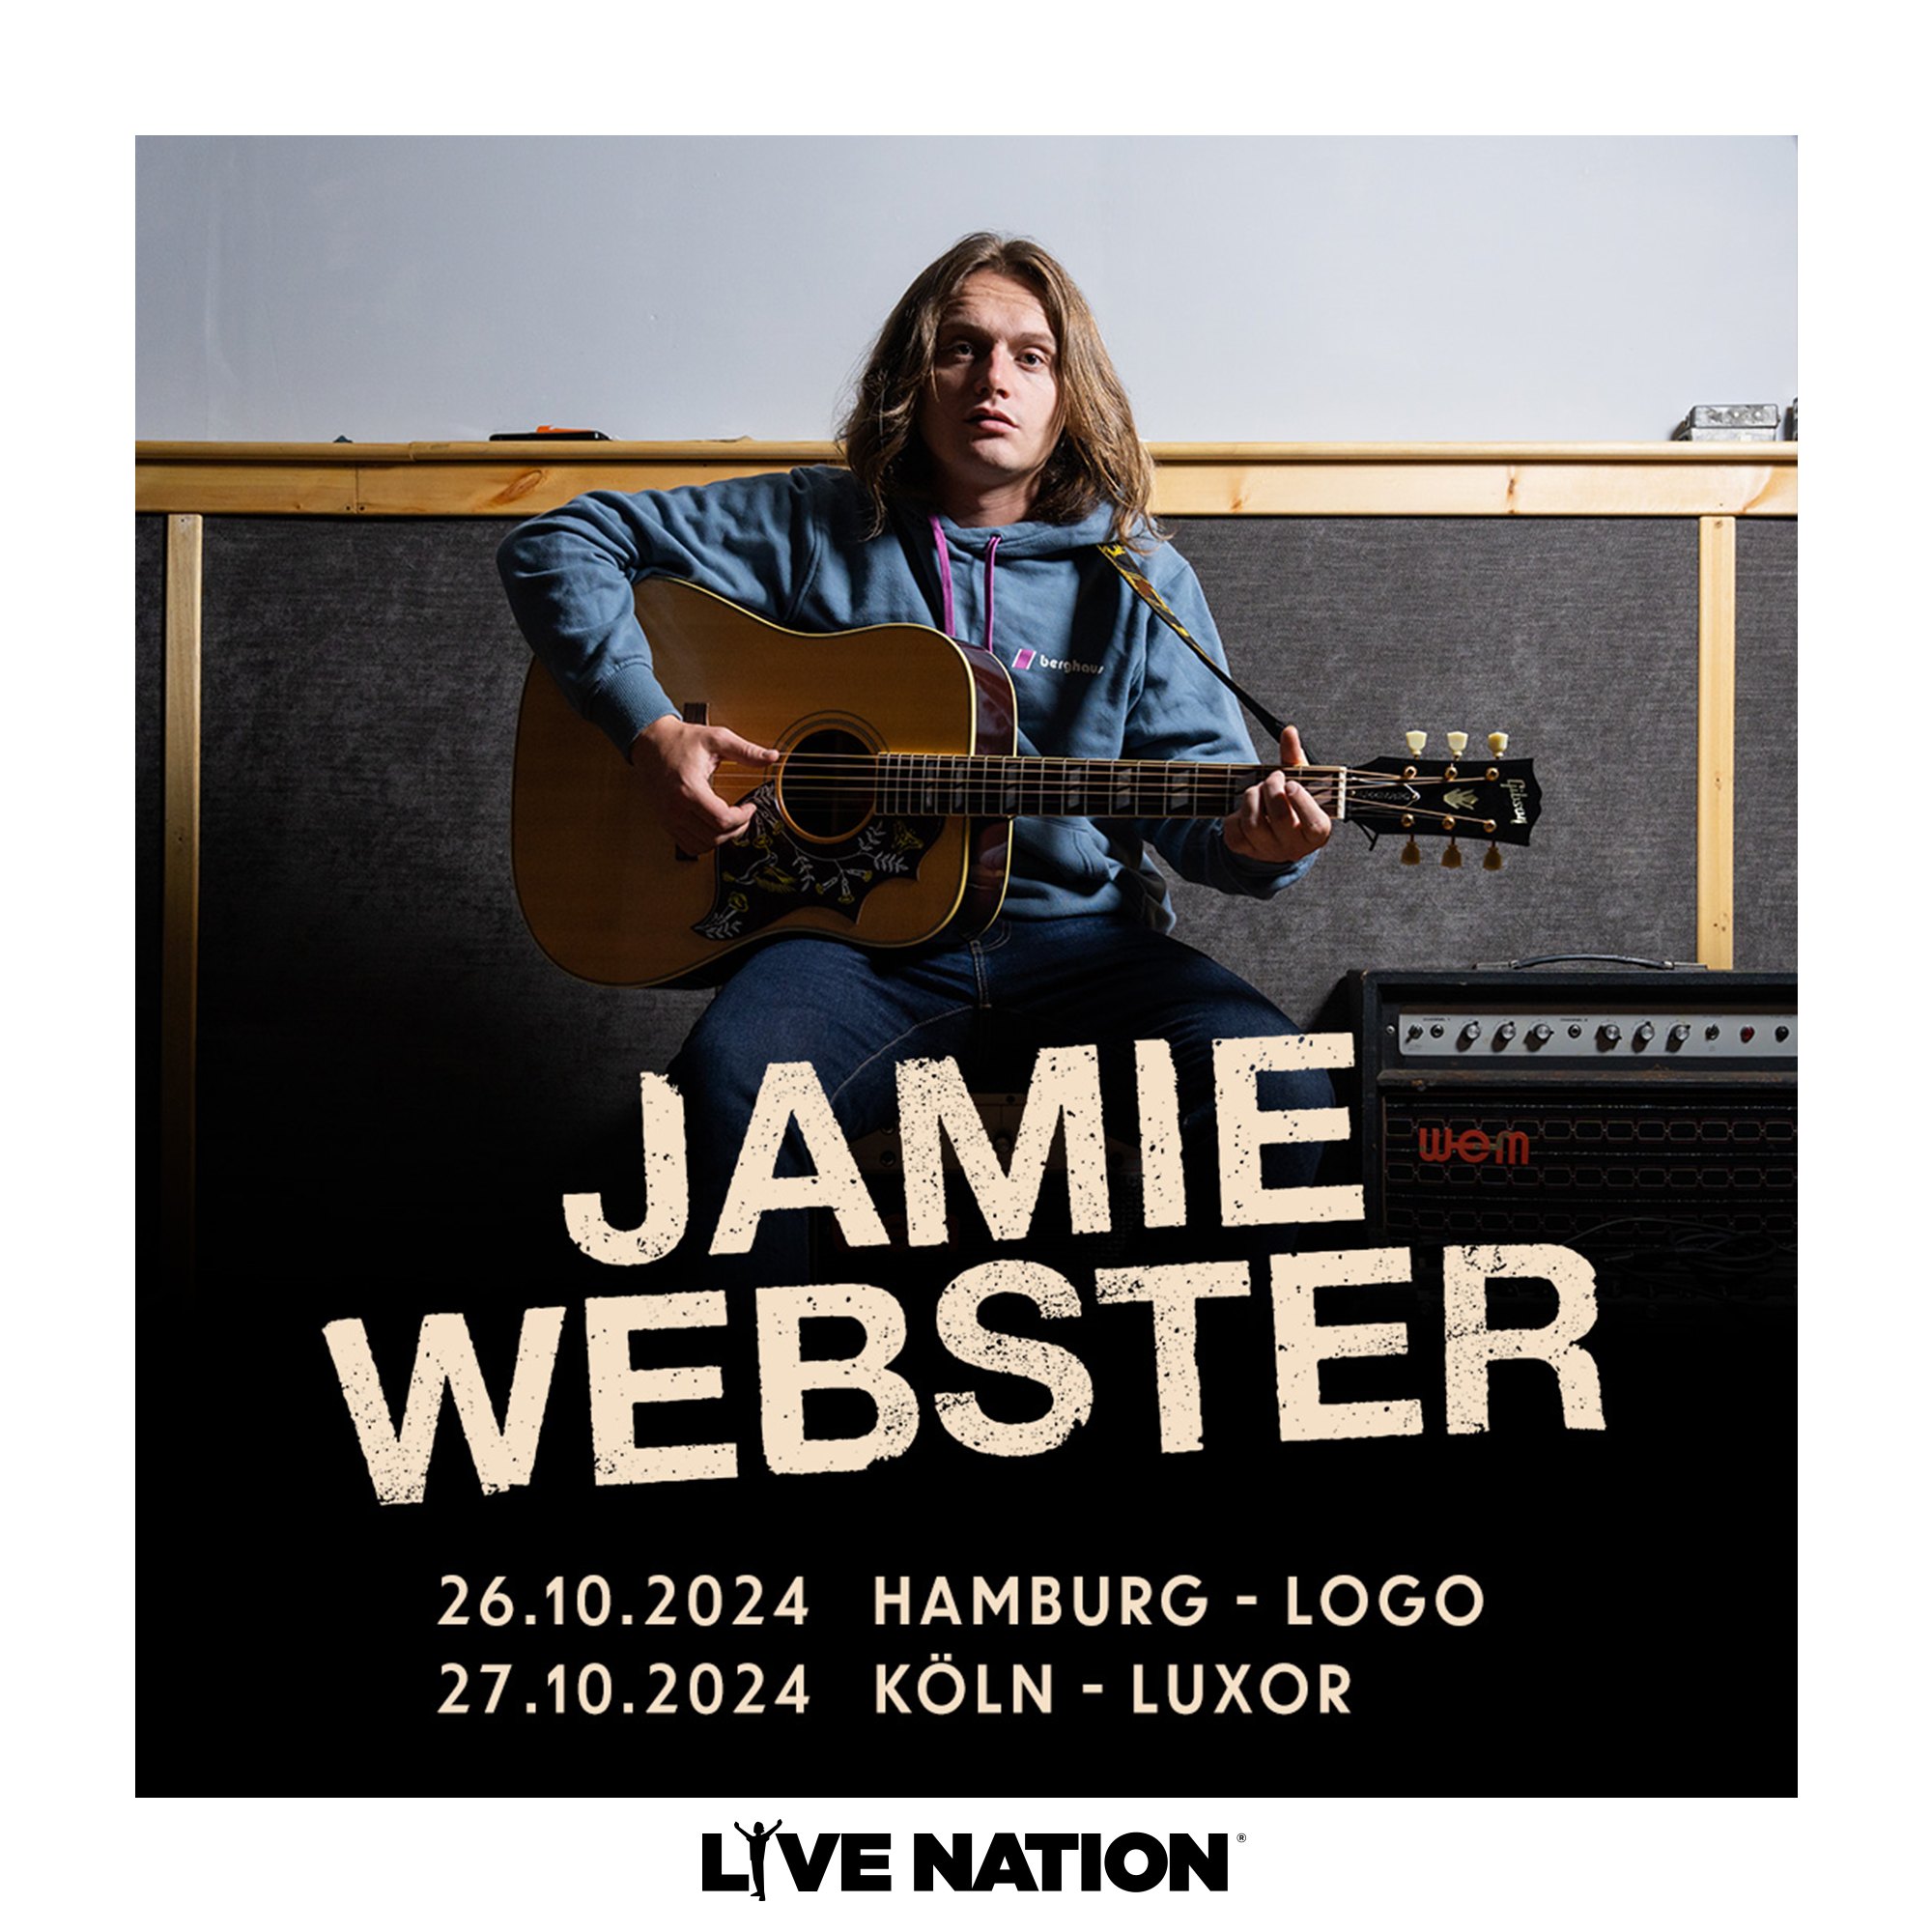 Jamie Webster en LOGO Hamburg Tickets